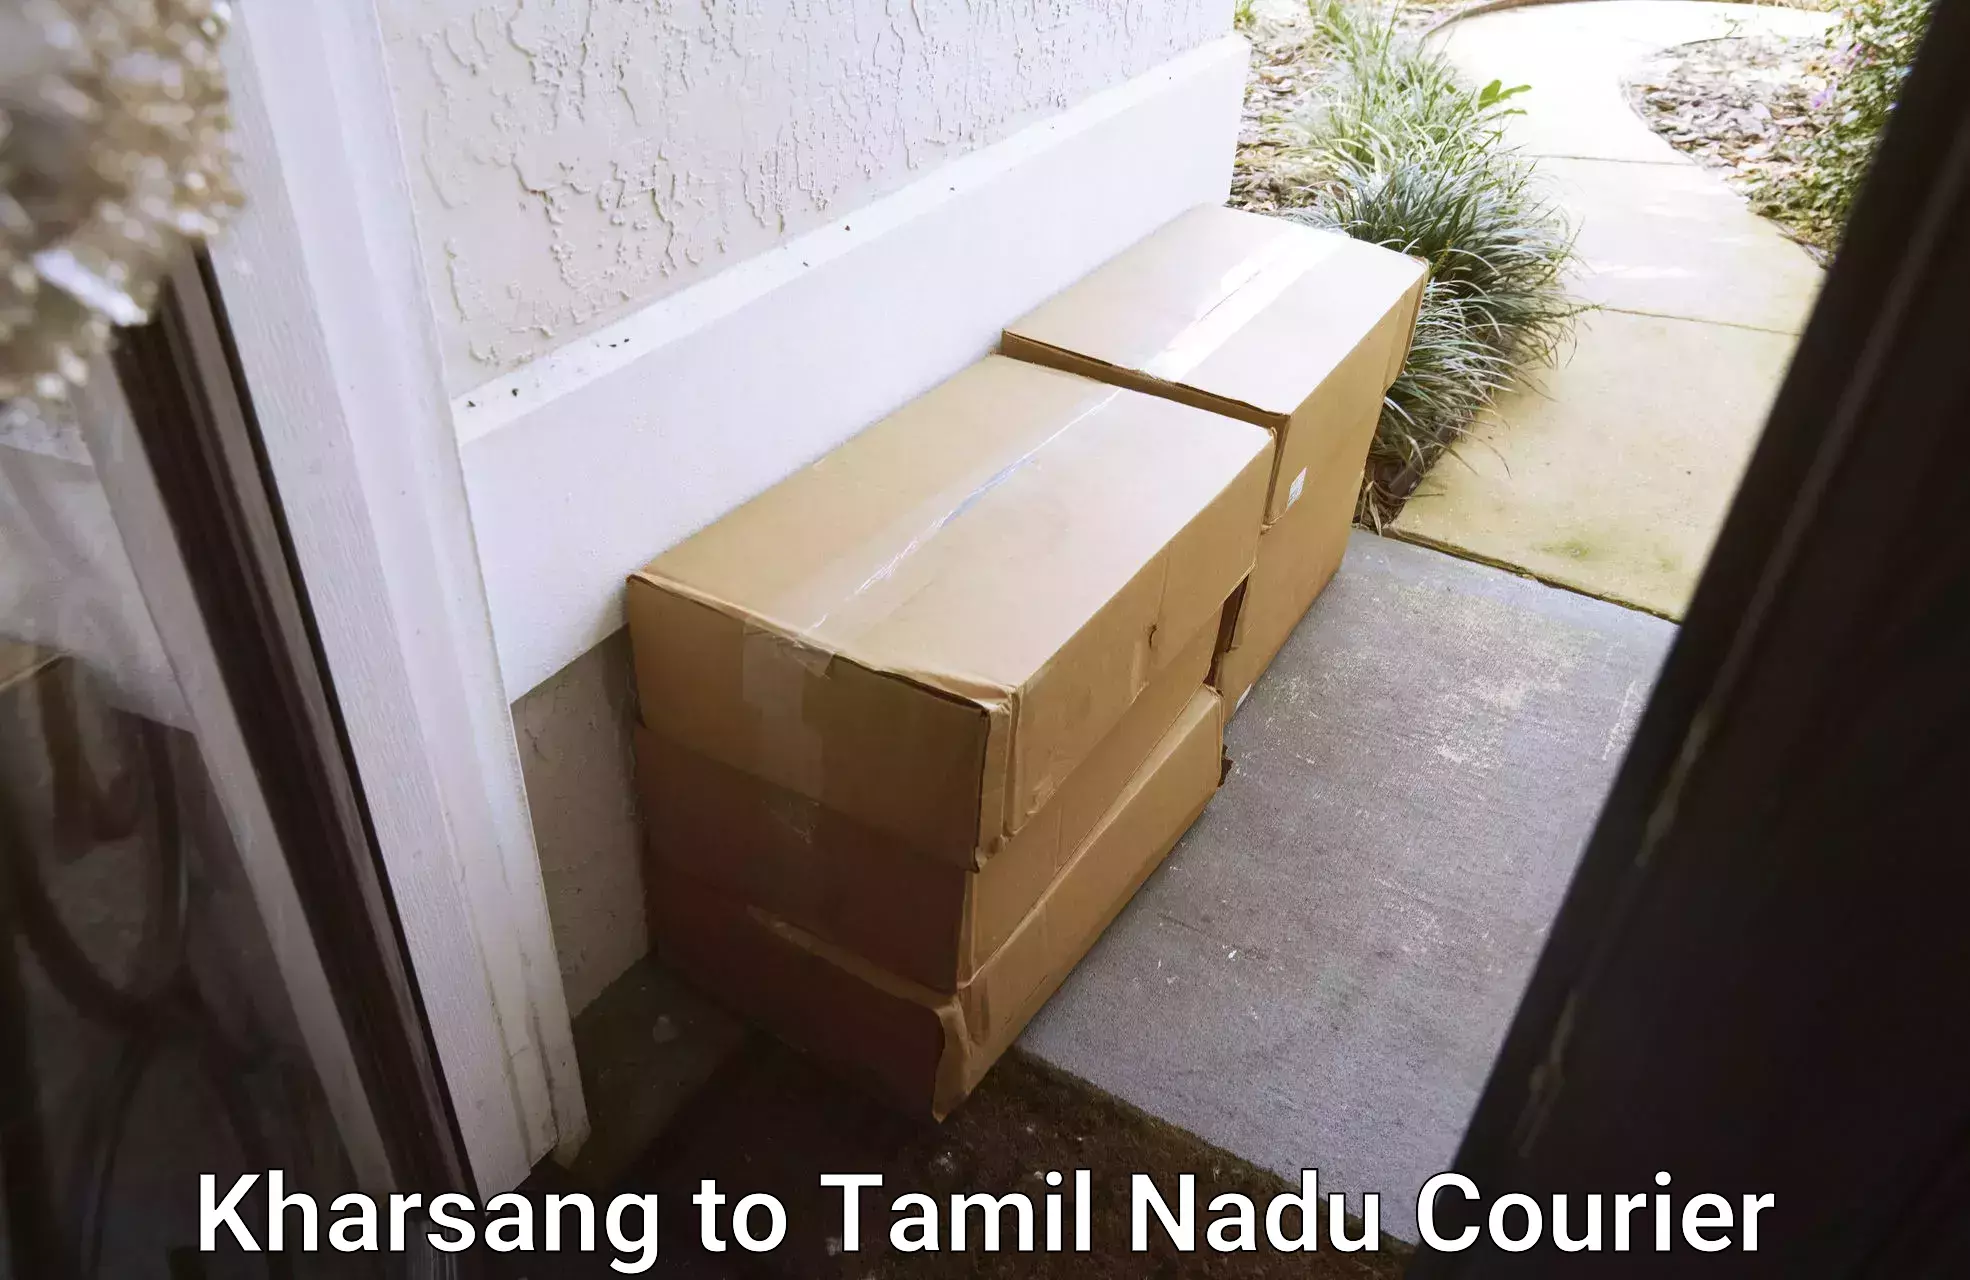 Courier service comparison Kharsang to Tamil Nadu